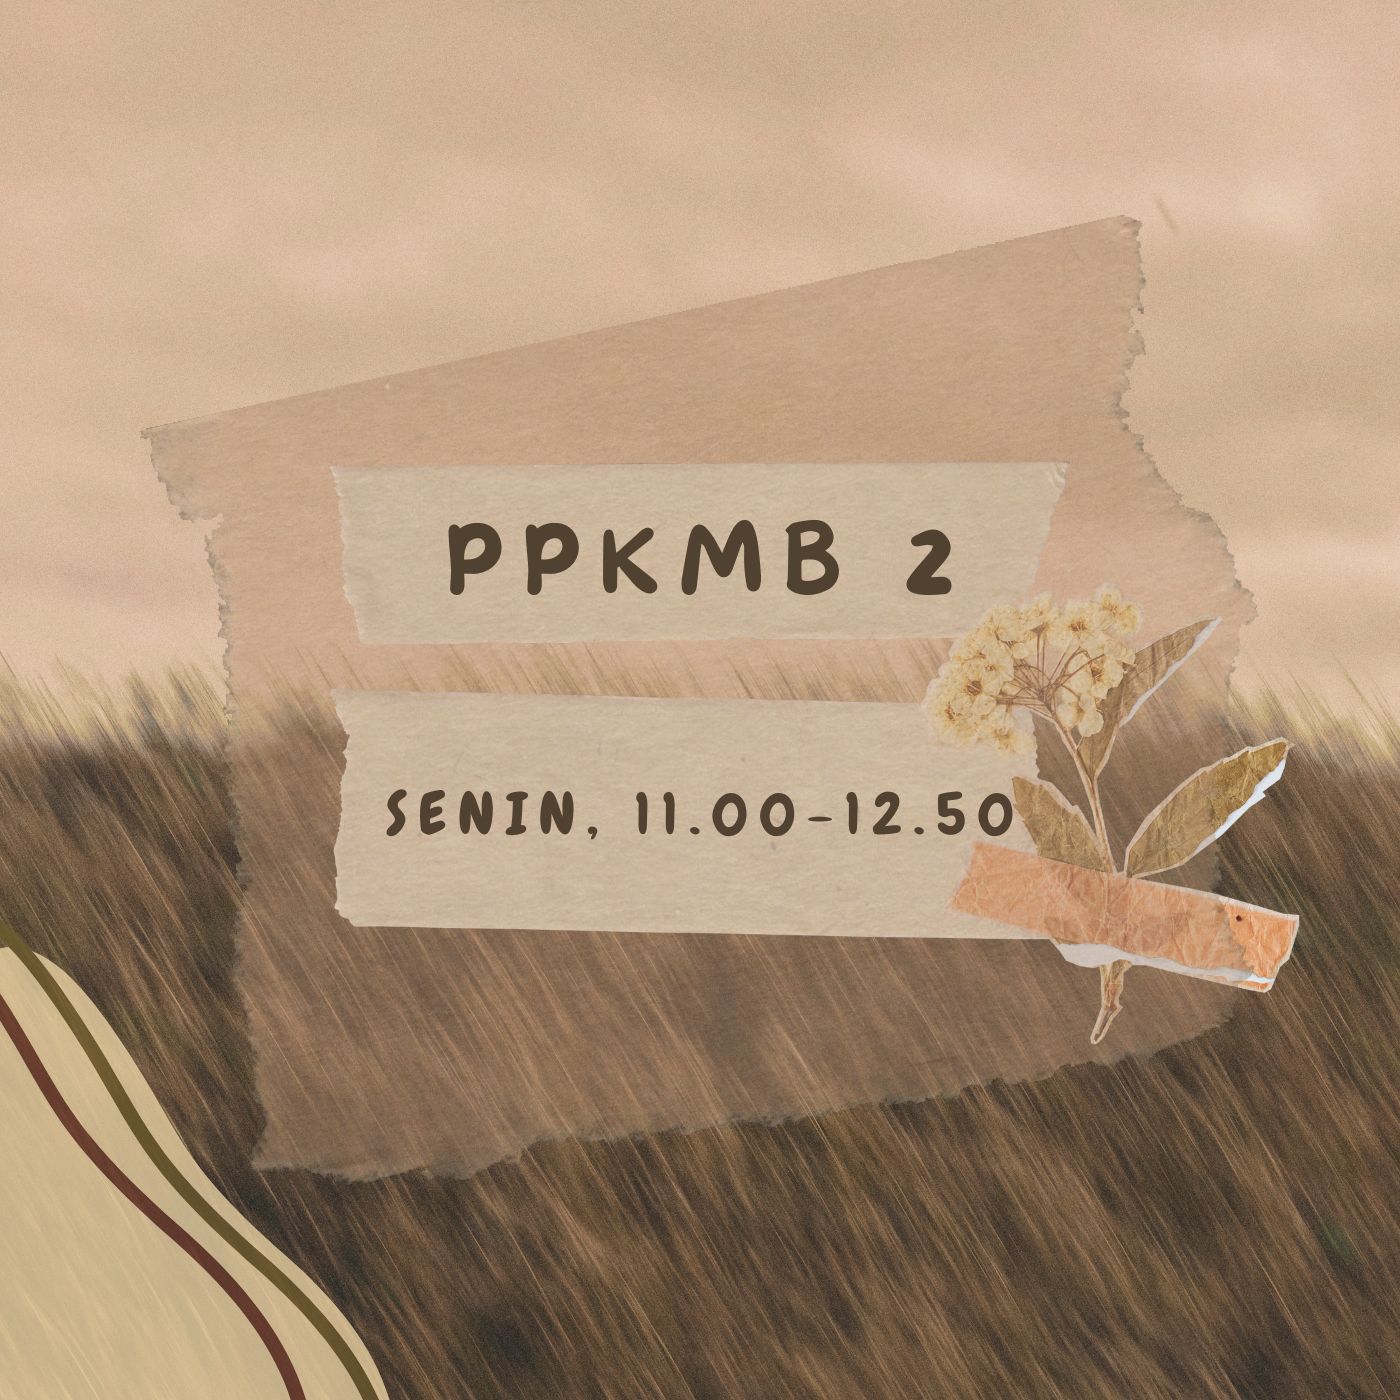 PPKM B G (PBIO II/2022/2023)